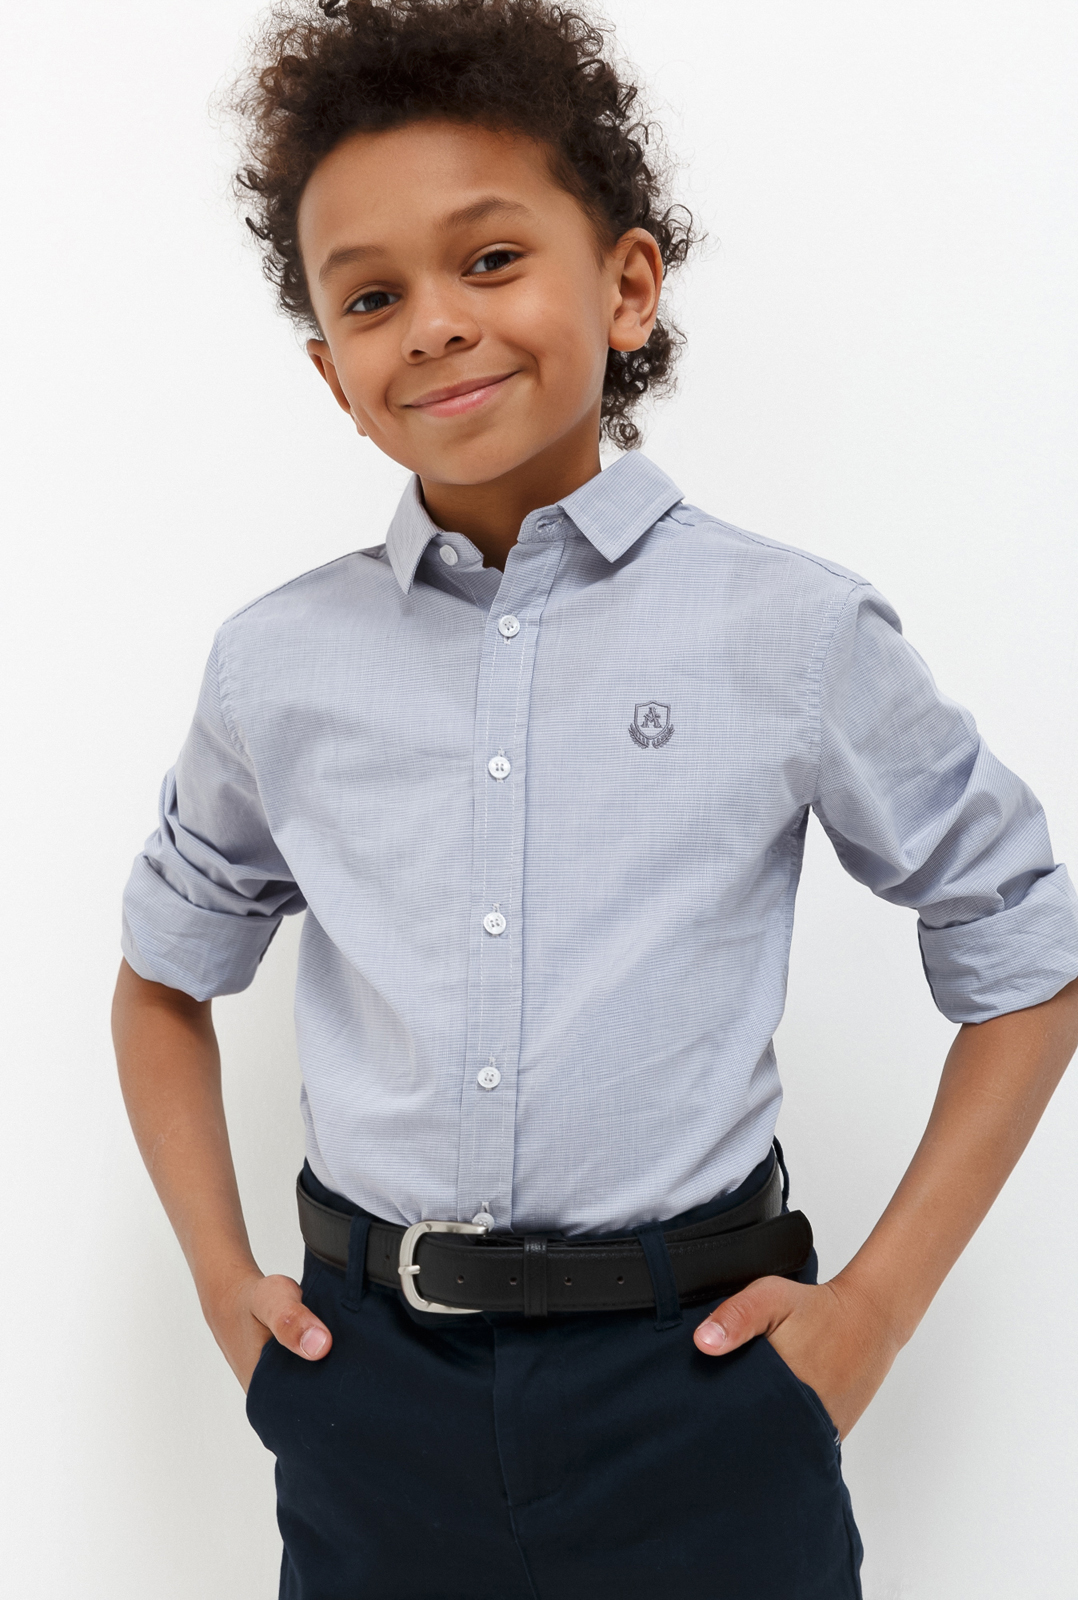 Рубашка для мальчика Acoola Lincoln, цвет: светло-серый. 20140280035_1800. Размер 158